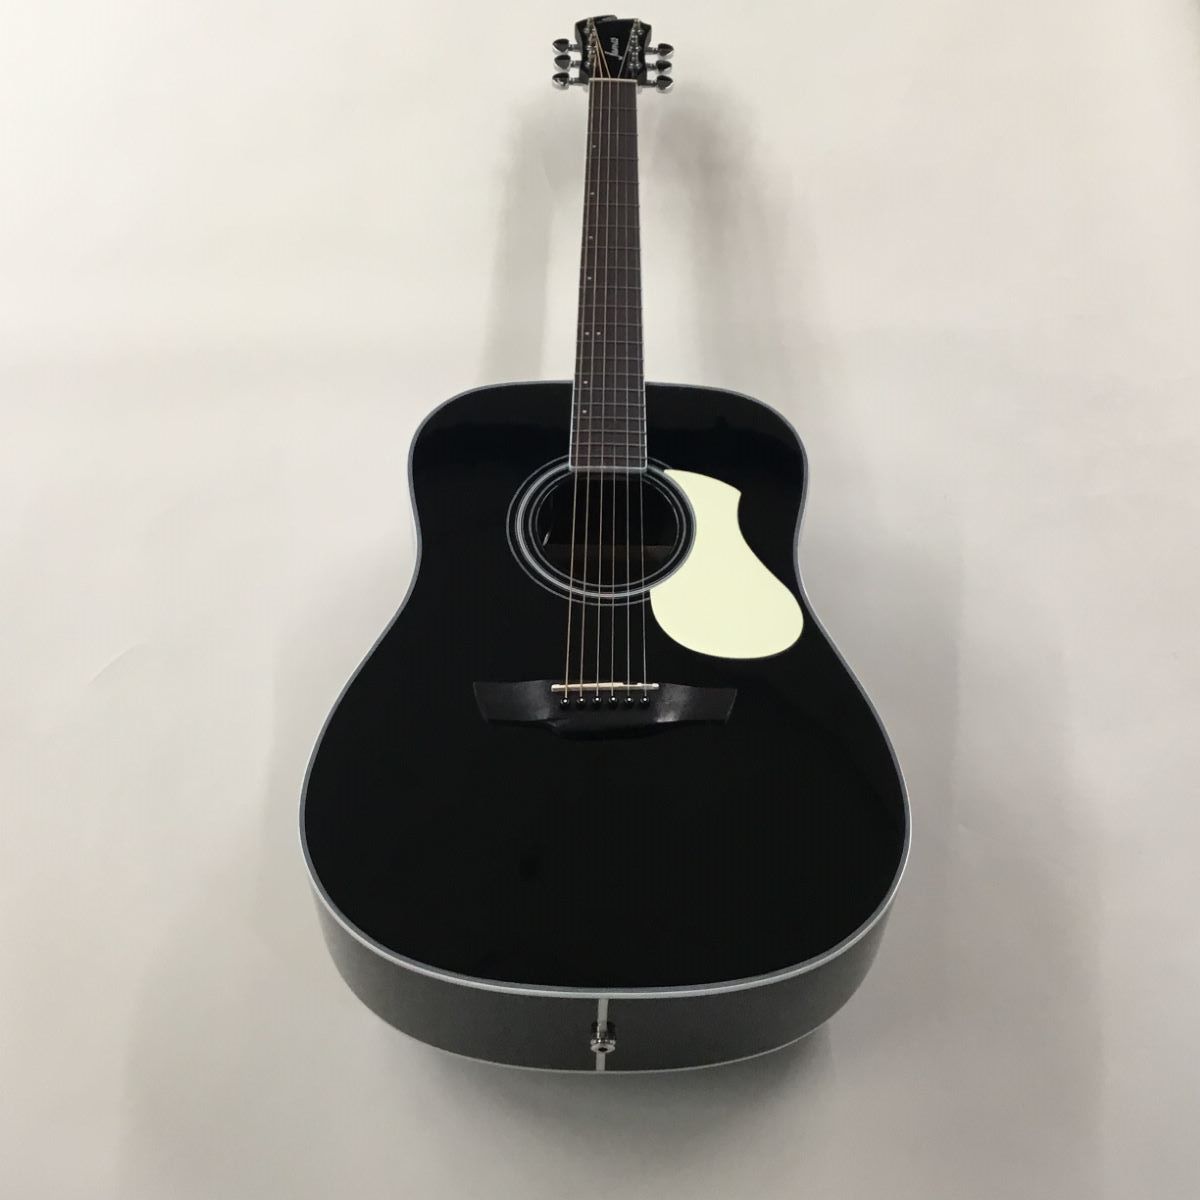 James】アコースティックギター J-450D/Ova BLK 黒 エレアコギター 